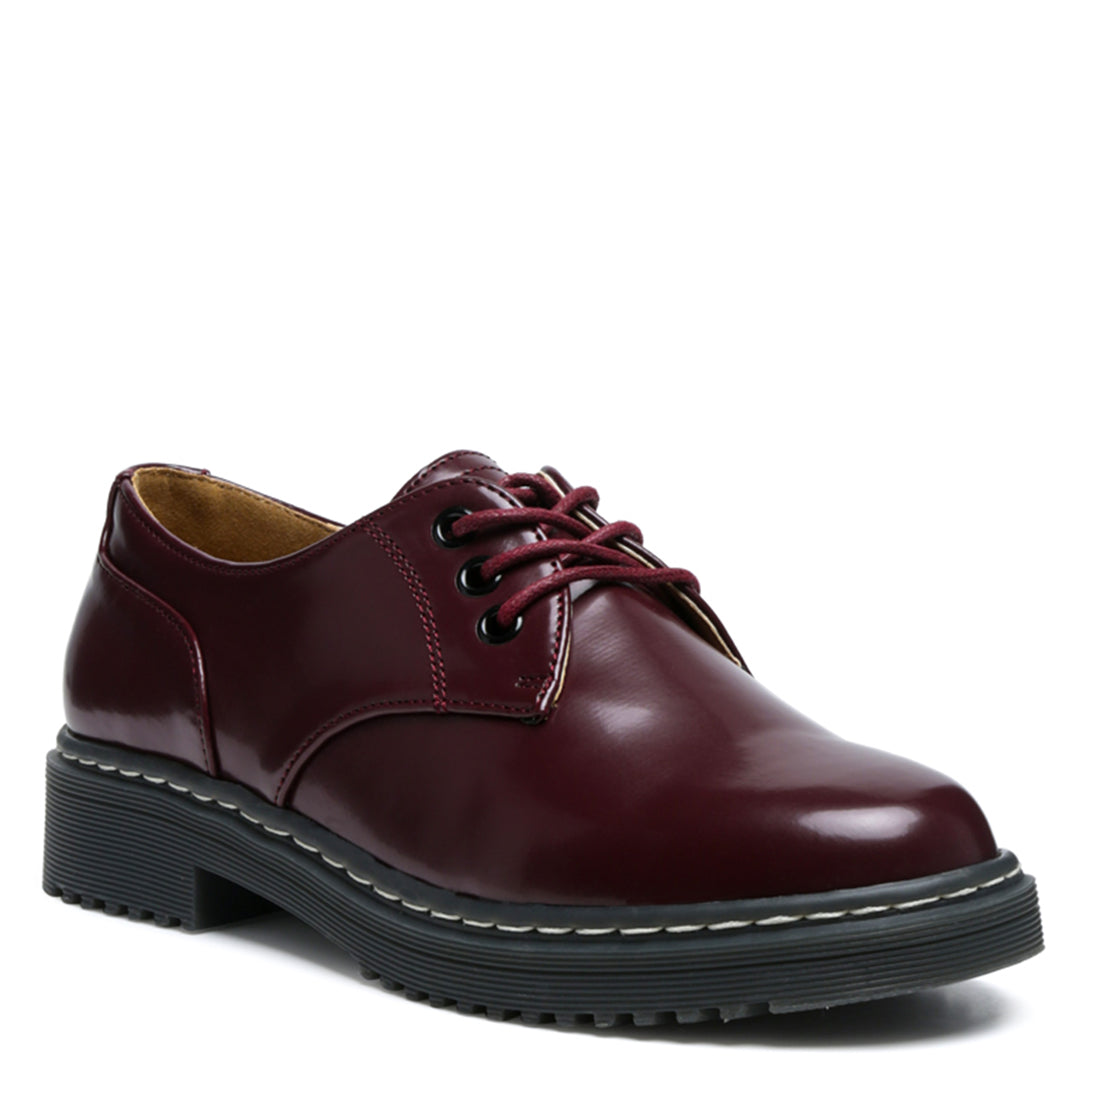 Burgundy Shanks Oxford Patent PU Shoes - UK3